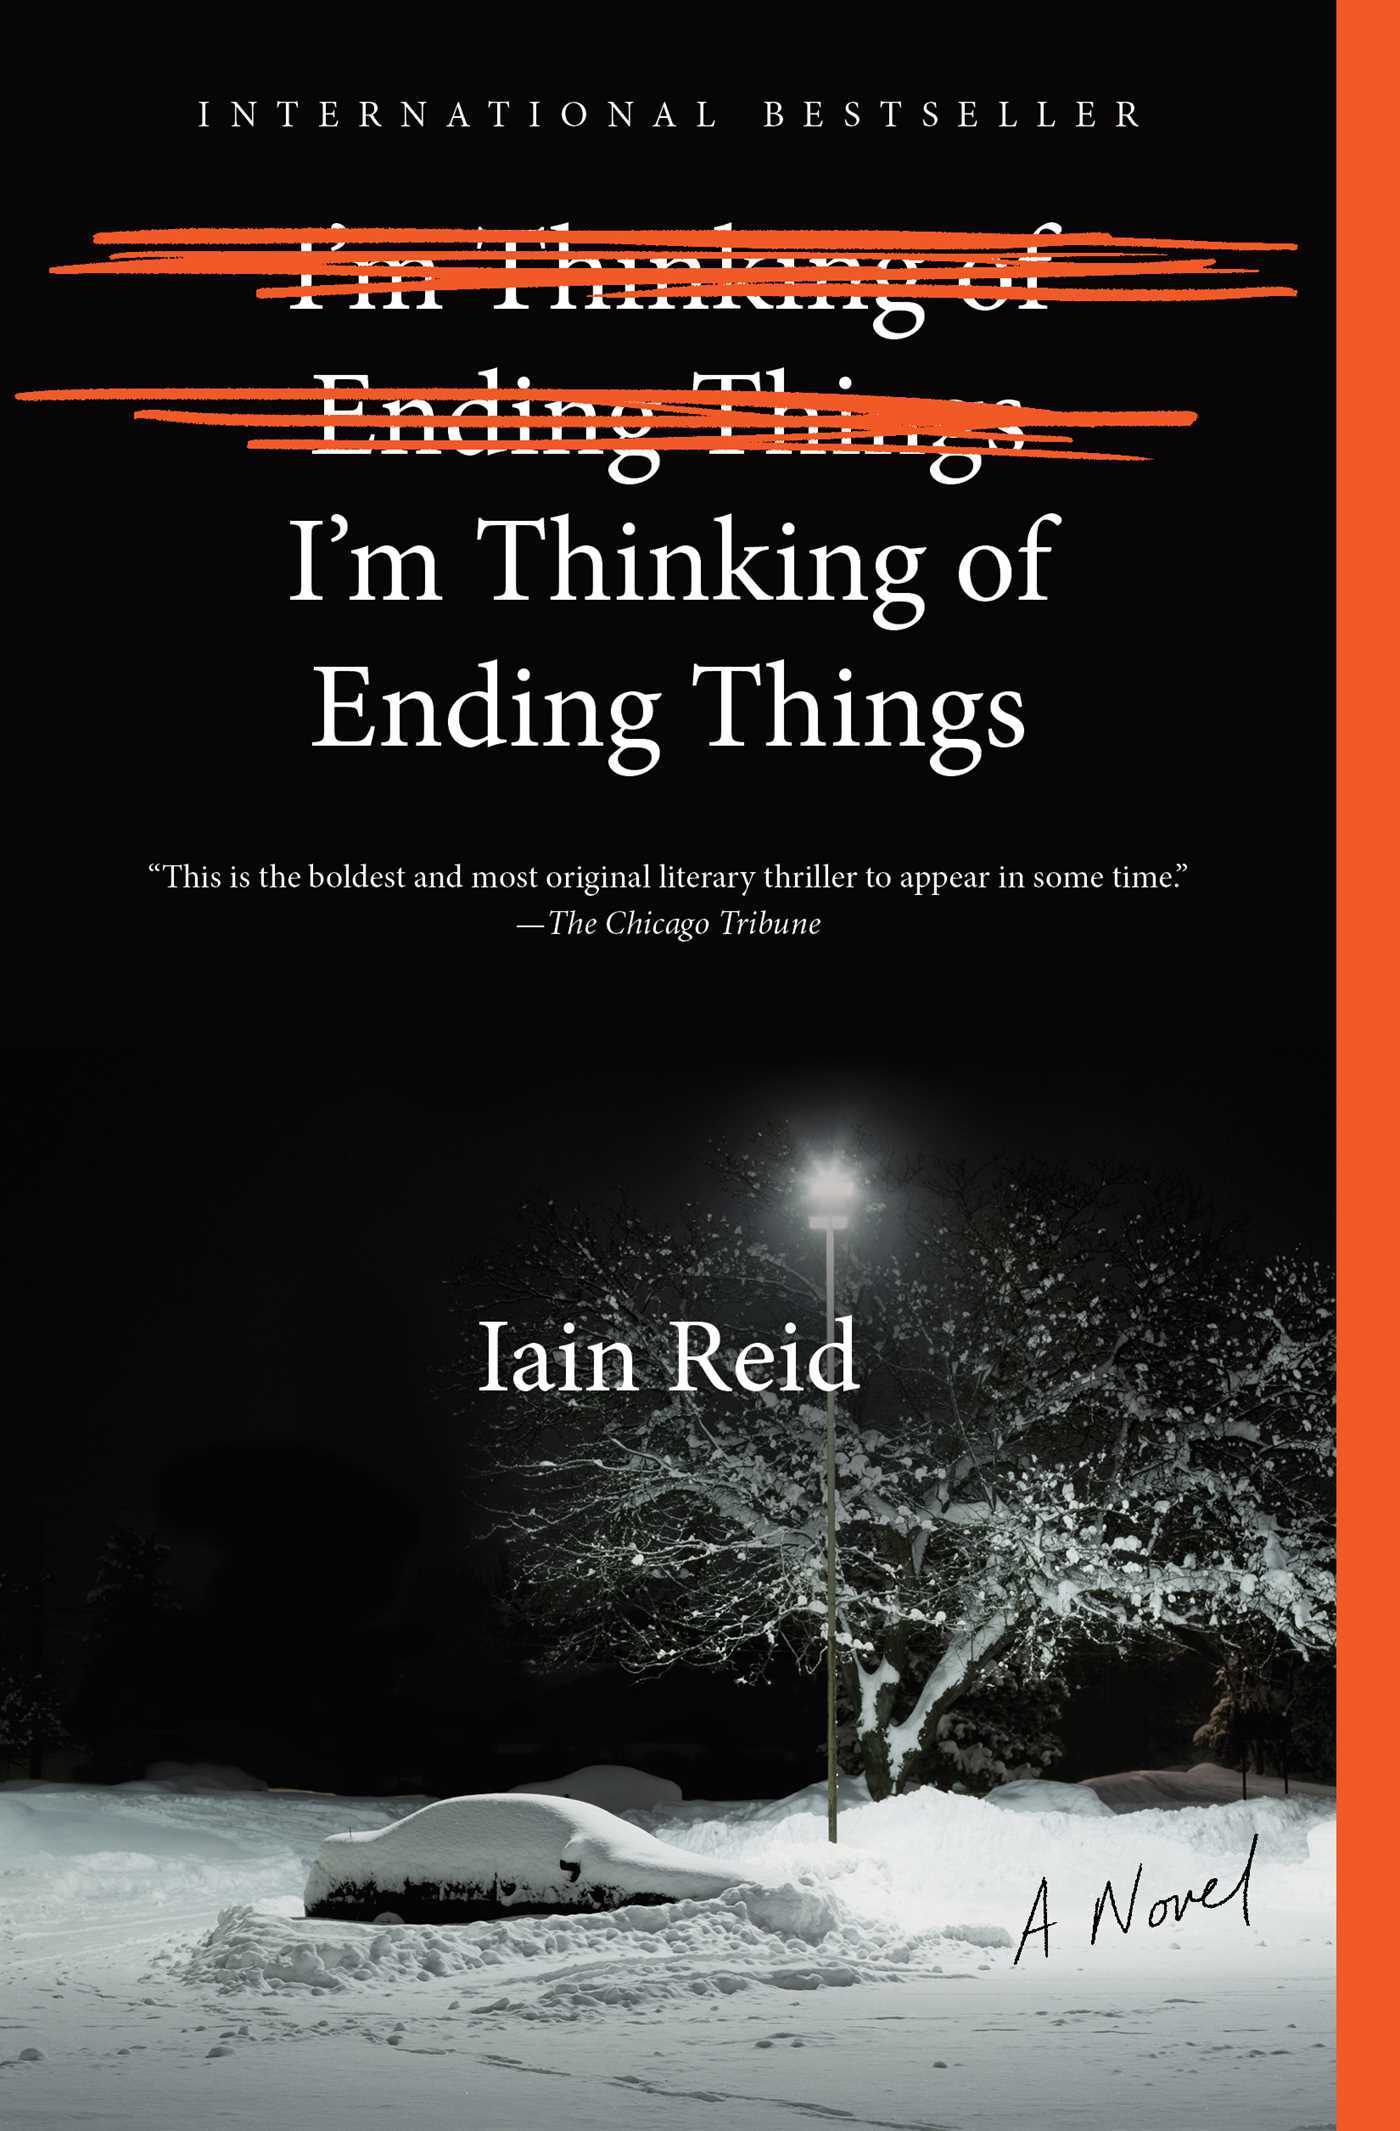 Iain Reid: I'm Thinking of Ending Things (2017, Simon & Schuster)